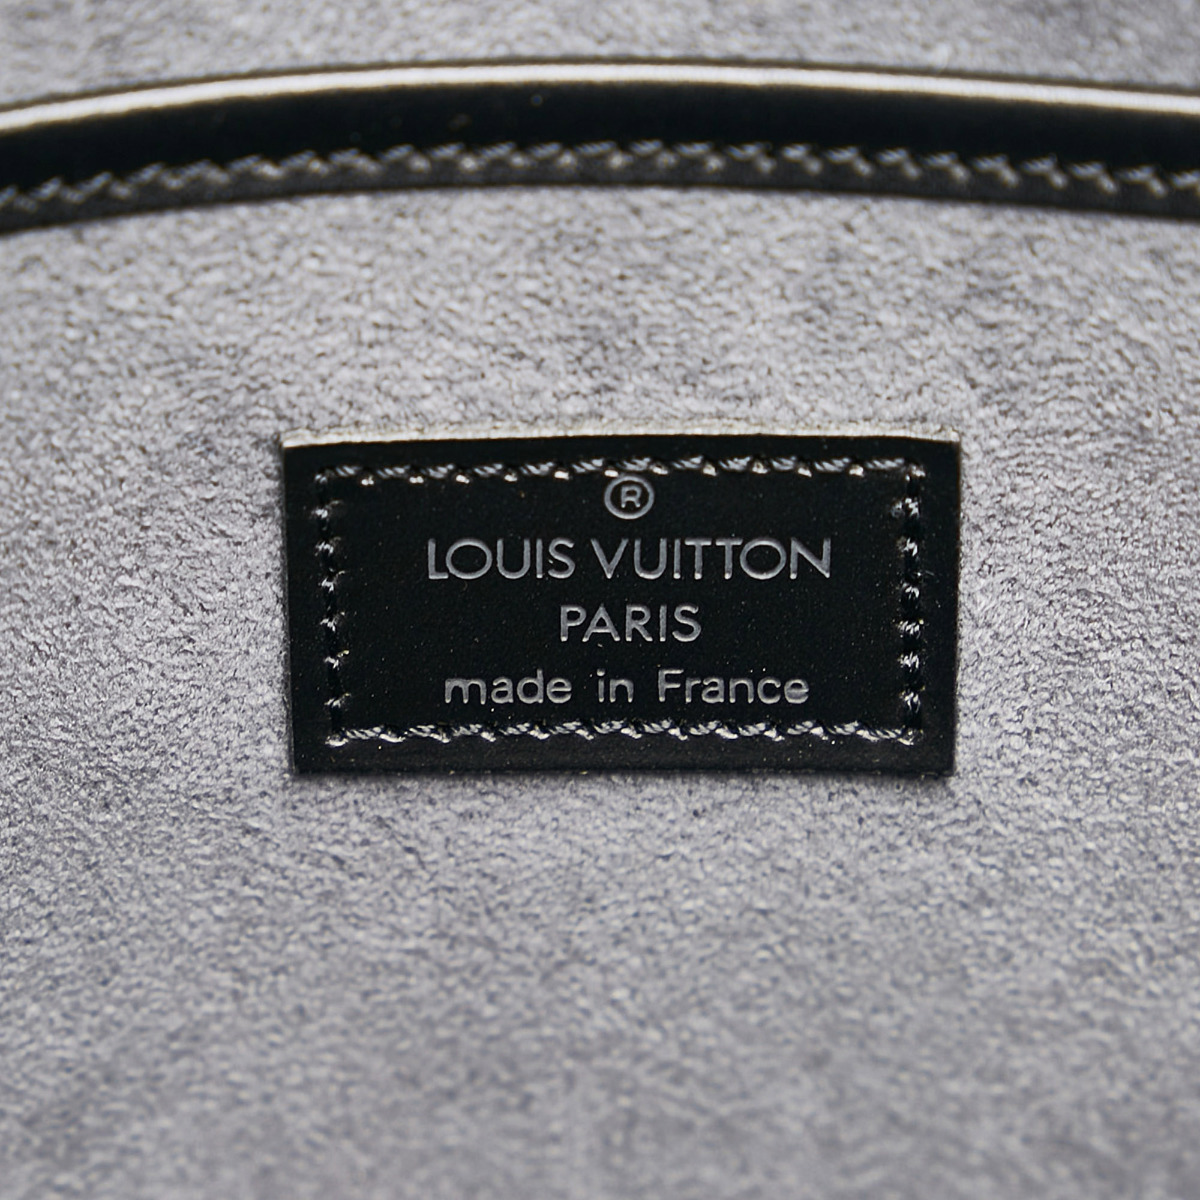 Chanel - Louis Vuitton, Sale n°2229, Lot n°414